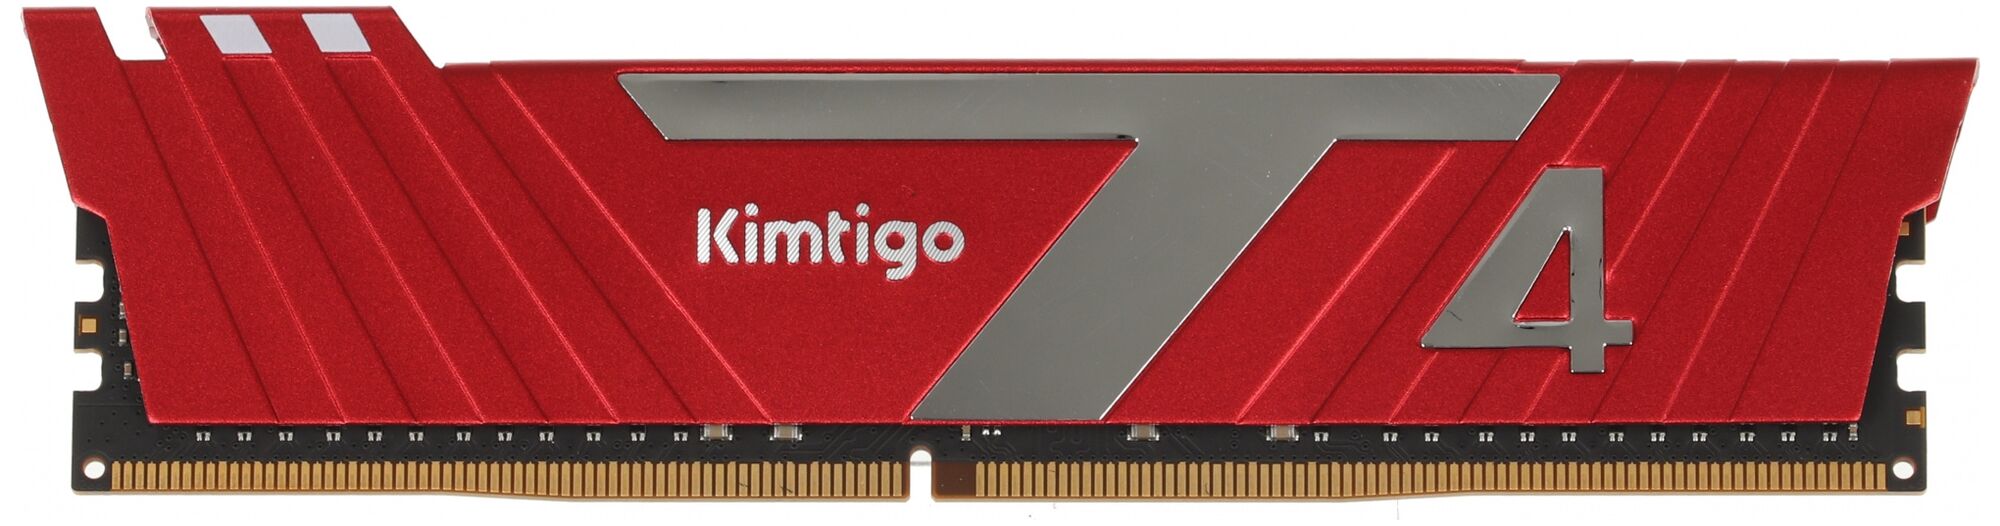 Оперативная память Kimtigo Kimtigo KMKUAGF683600T4-R/16GB / PC4-28800 DDR4 UDIMM-3600MHz DIMM/в комплекте 1 модуль